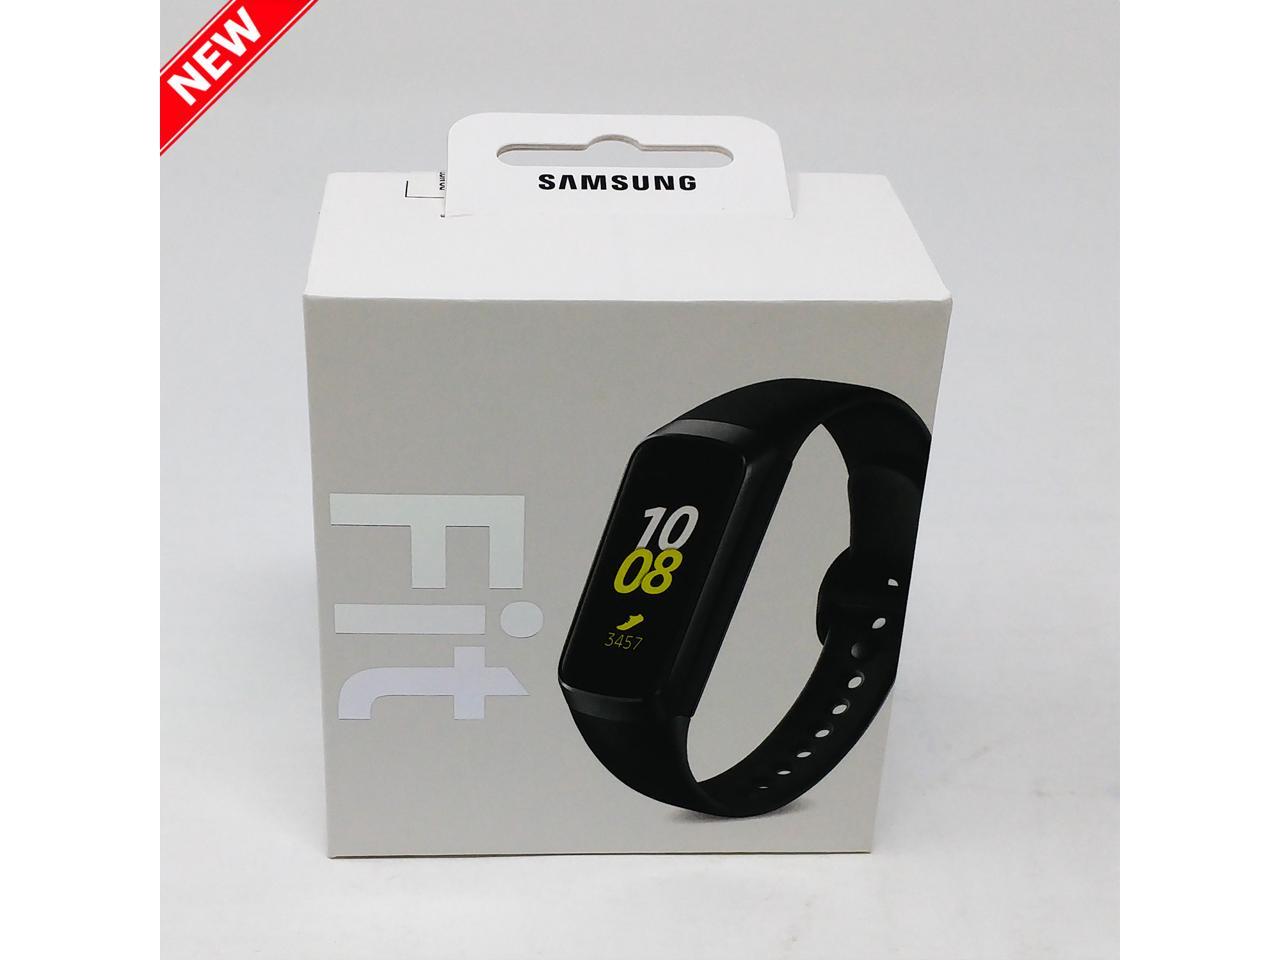 Samsung Galaxy Fit (Bluetooth), SM-R370 -International Version No Warranty - Black